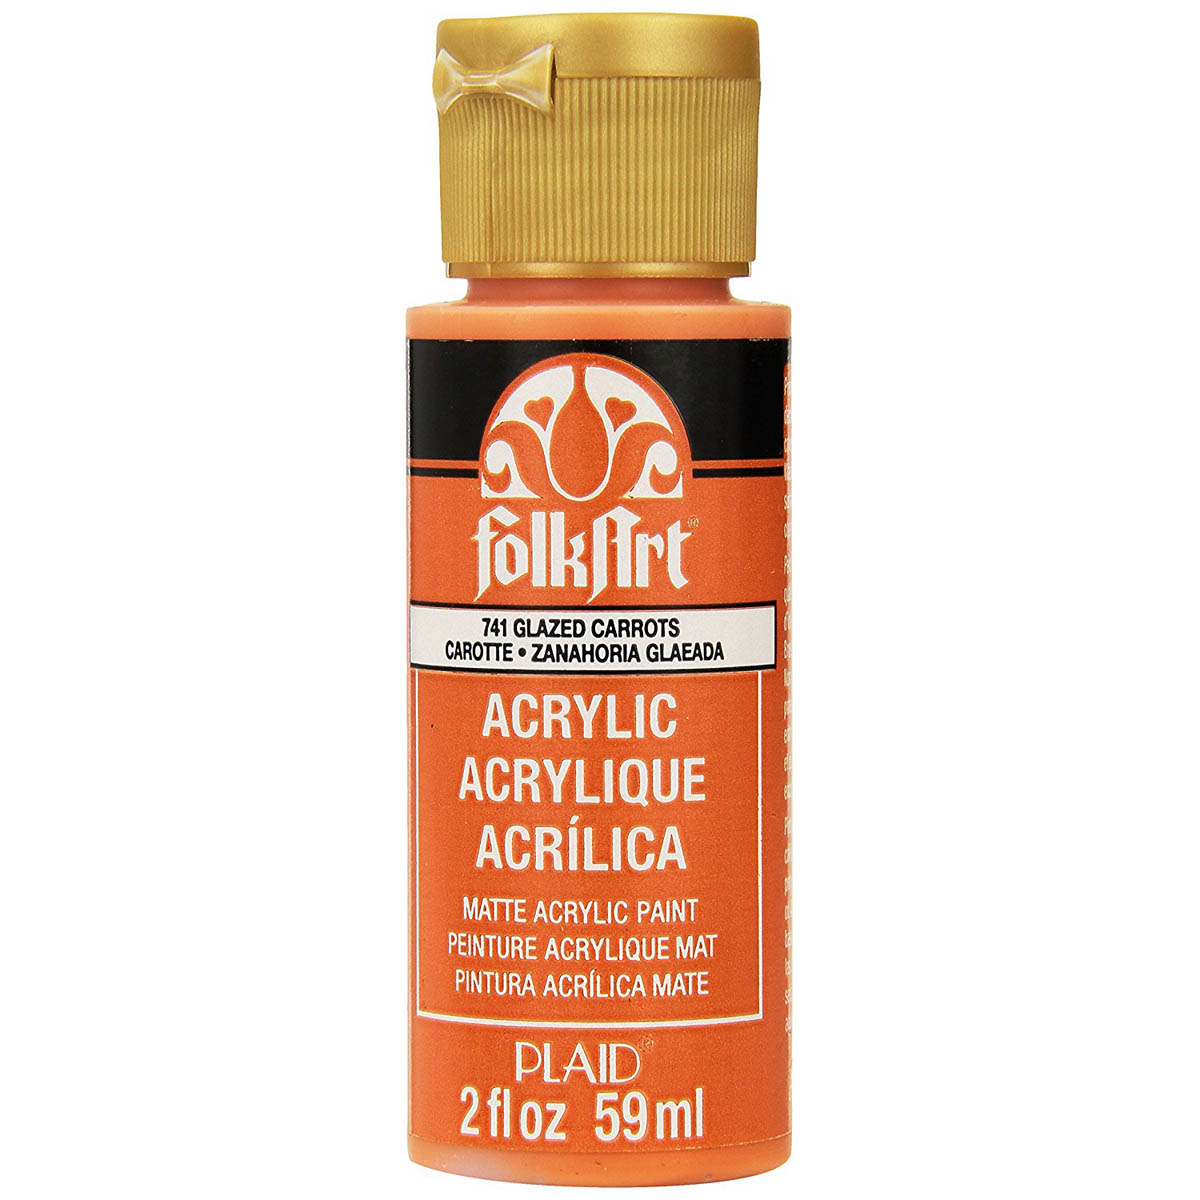 FolkArt ® Acrylic Colors - Glazed Carrots, 2 oz. - 741